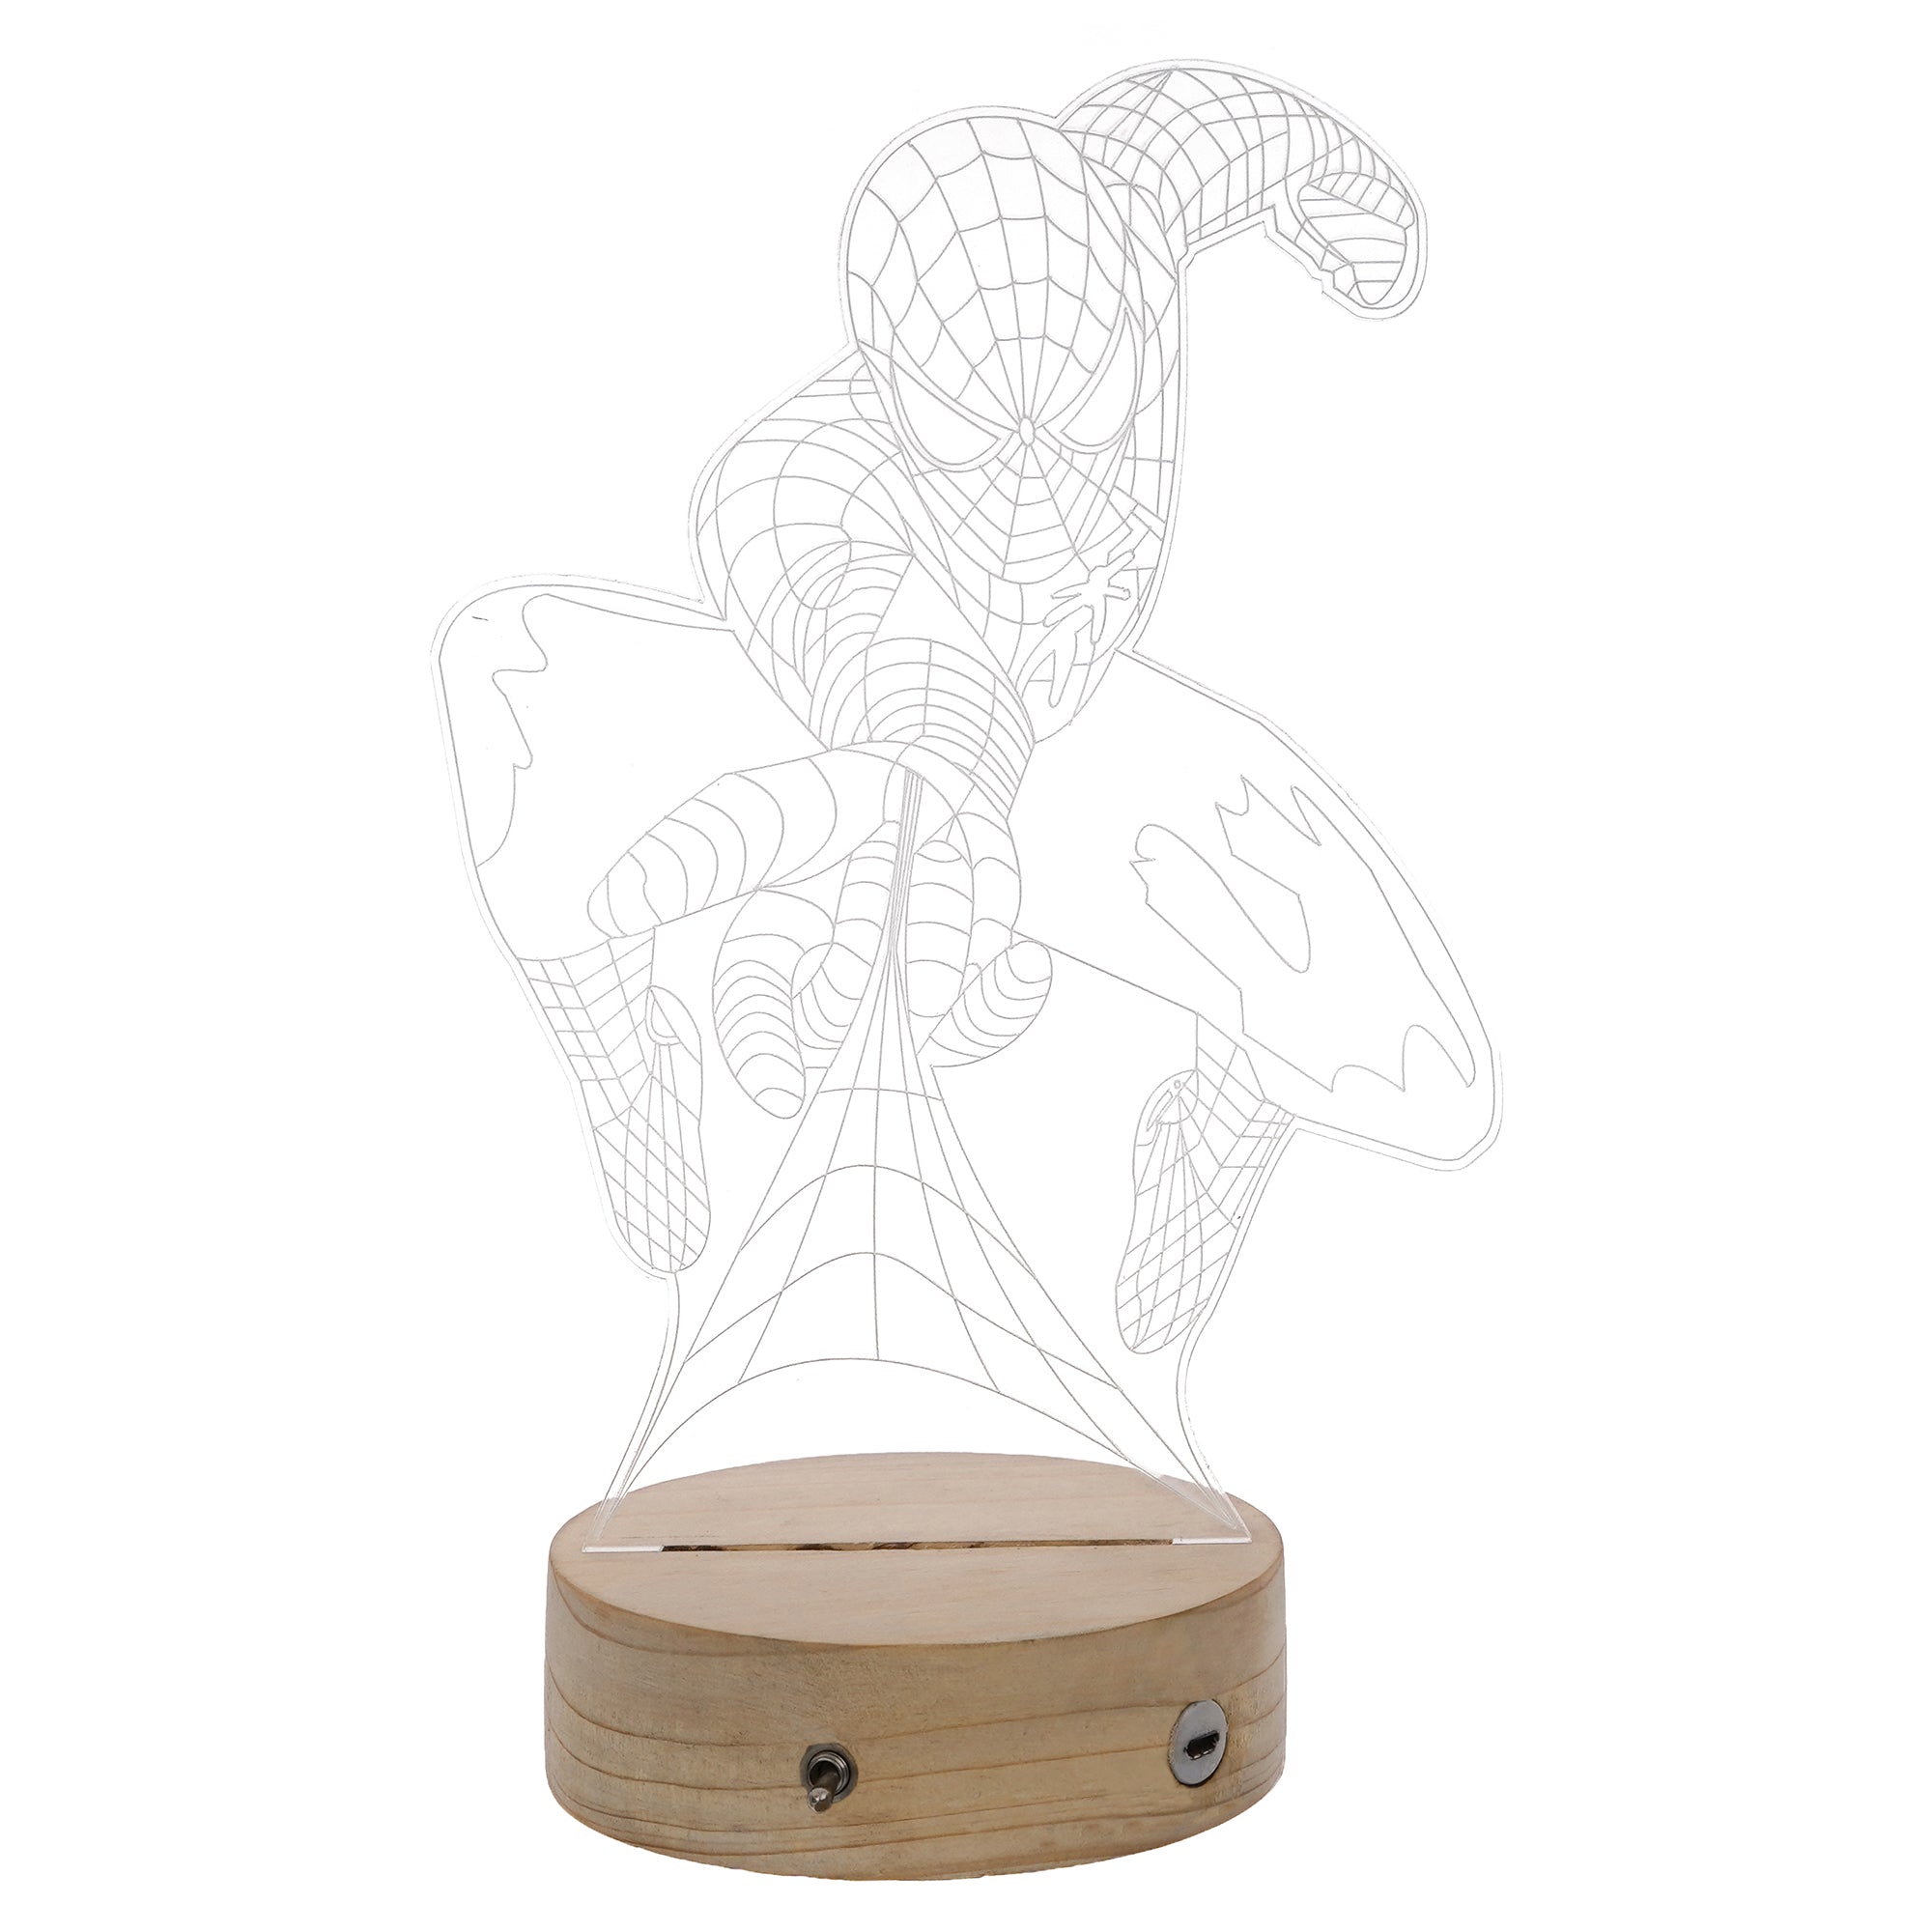 Spiderman Design Carved on Acrylic & Wood Base Night Lamp 6